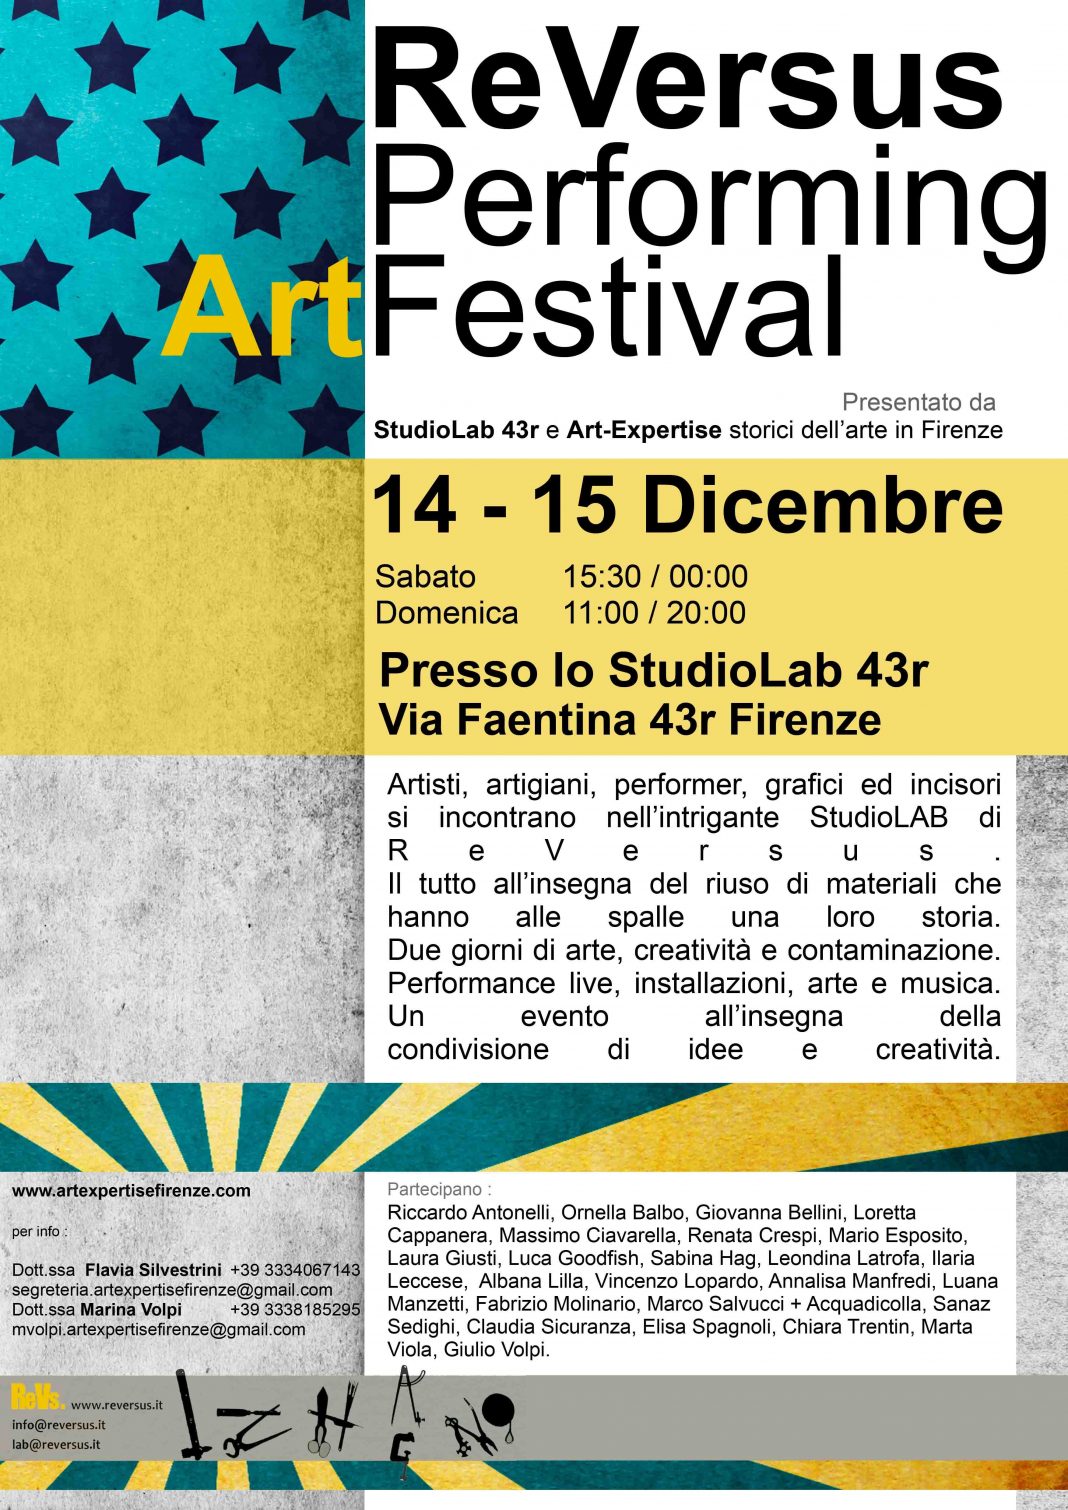 REVERSUS PERFORMING ART FESTIVALhttps://www.exibart.com/repository/media/eventi/2013/12/reversus-performing-art-festival-1-1068x1510.jpg